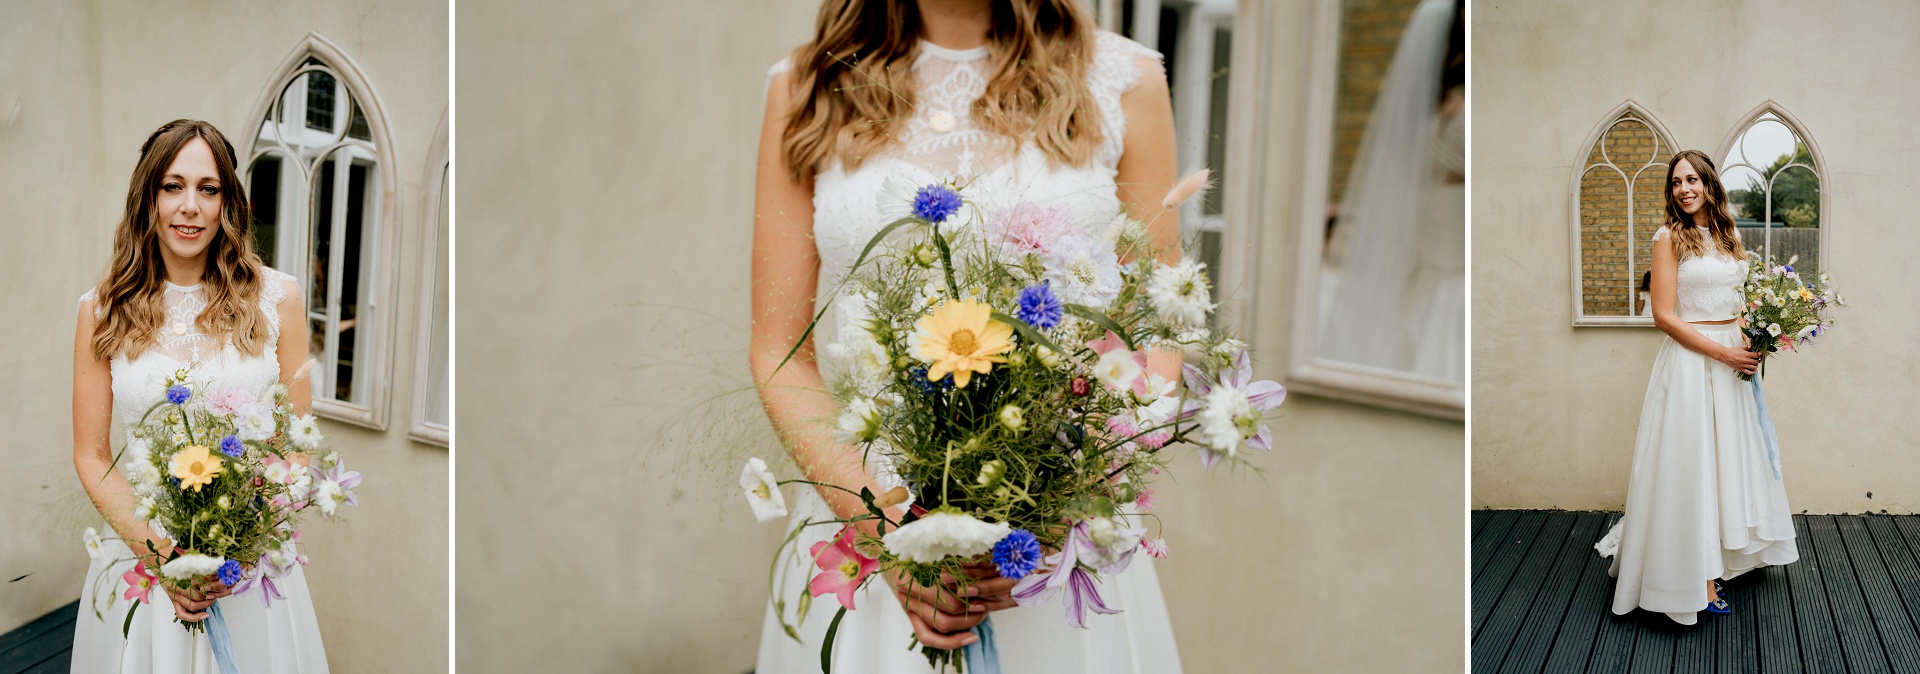 triptich of bridal portrait with flowers